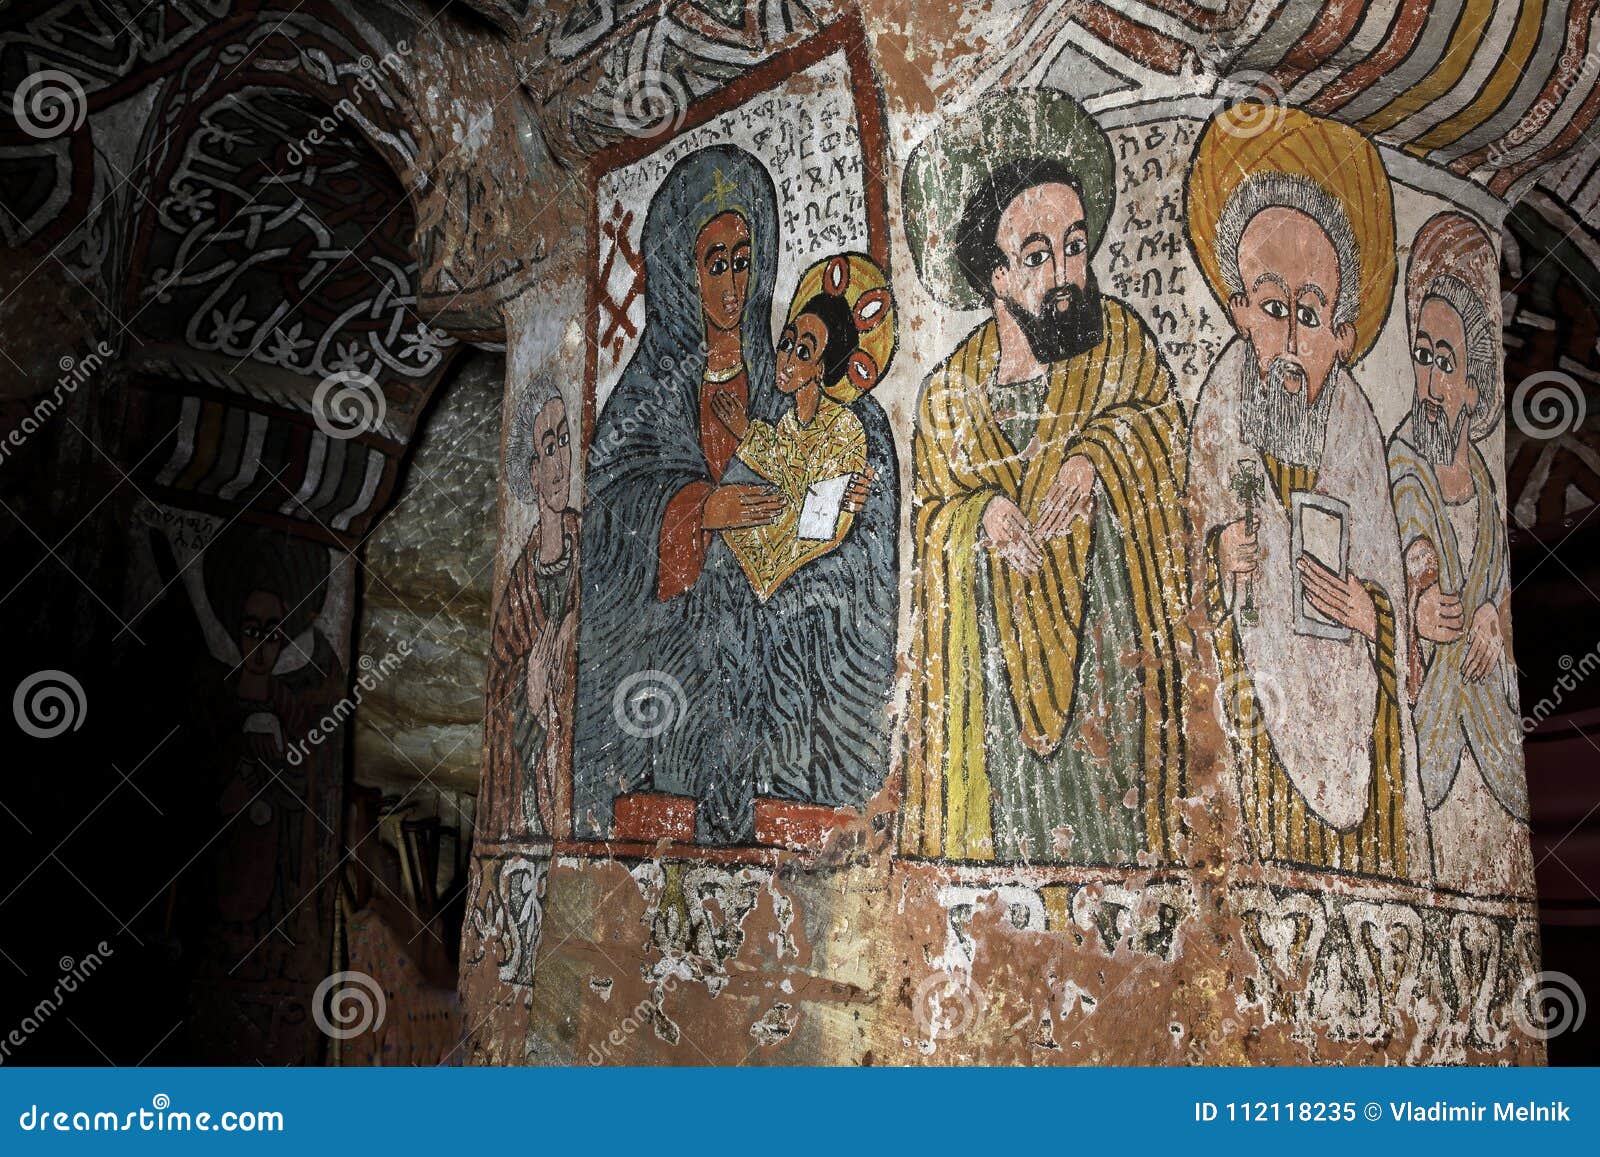 iconographic scenes in abuna yemata church in ethiopia